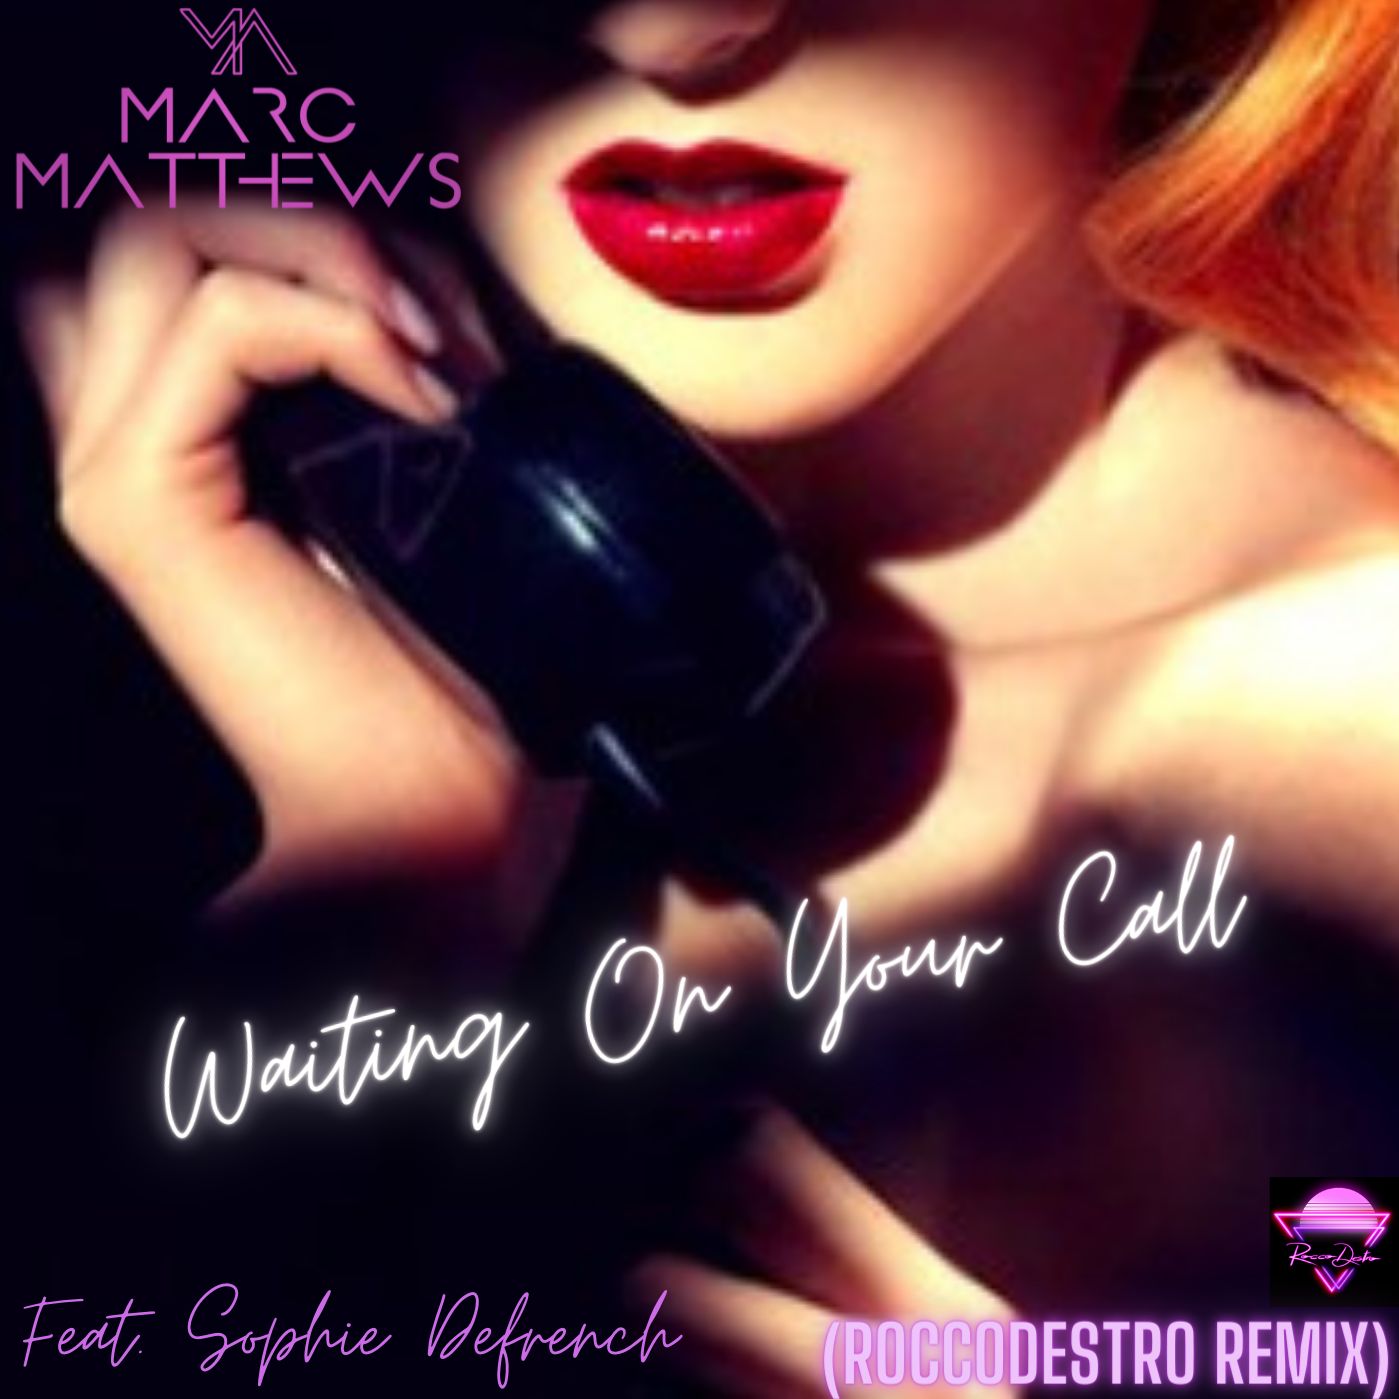 Descarca Waiting On Your Call (Rocco Destro Remix)